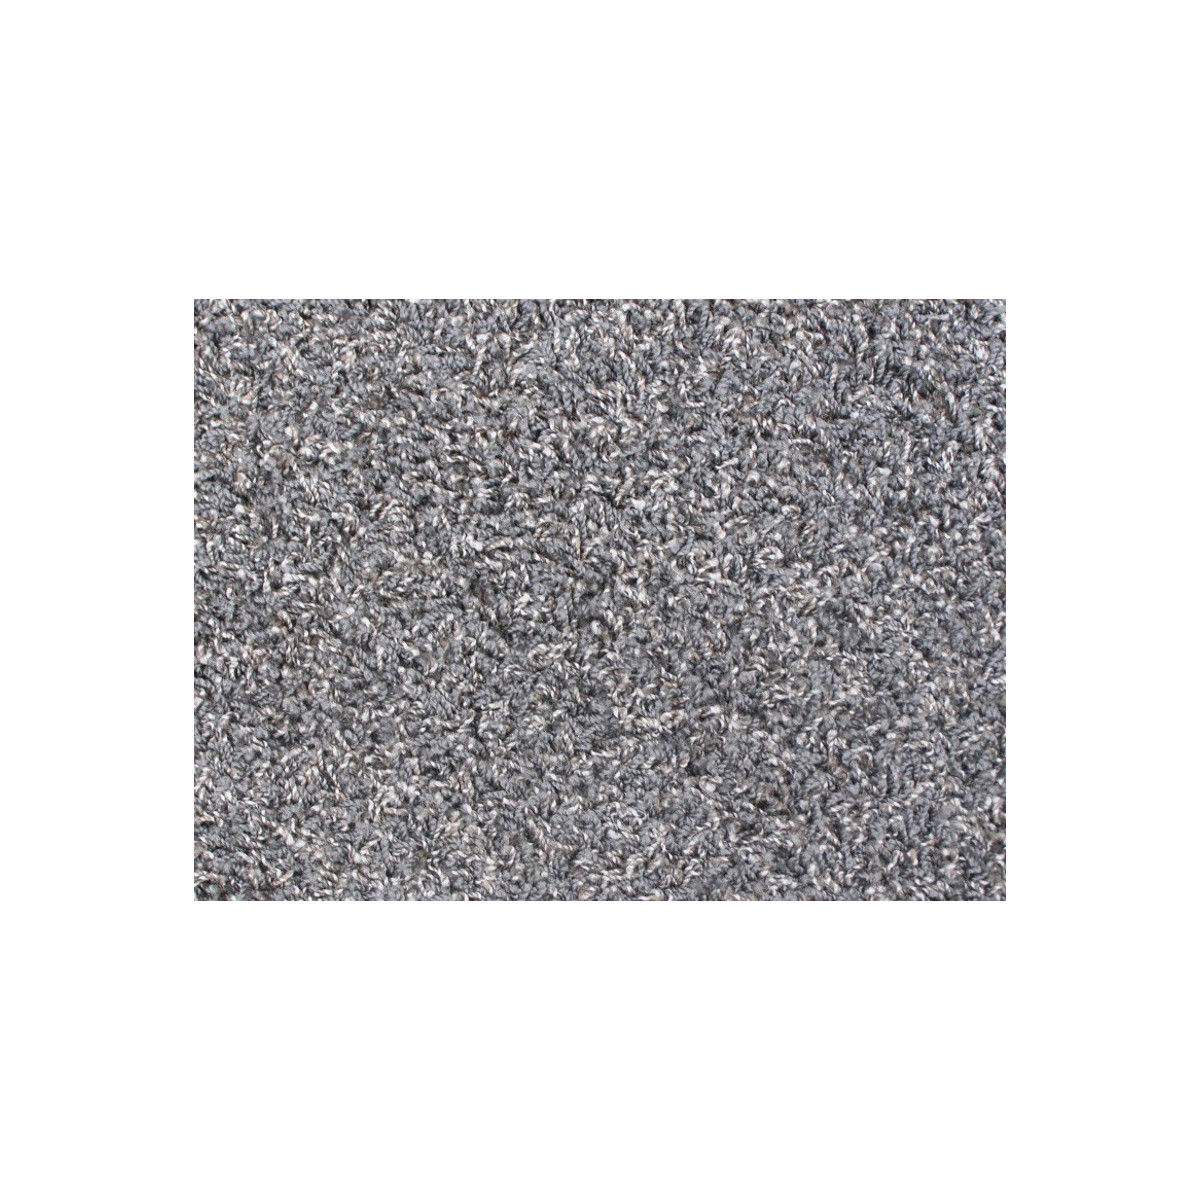 Metrážový koberec Xanadu 166 šedá